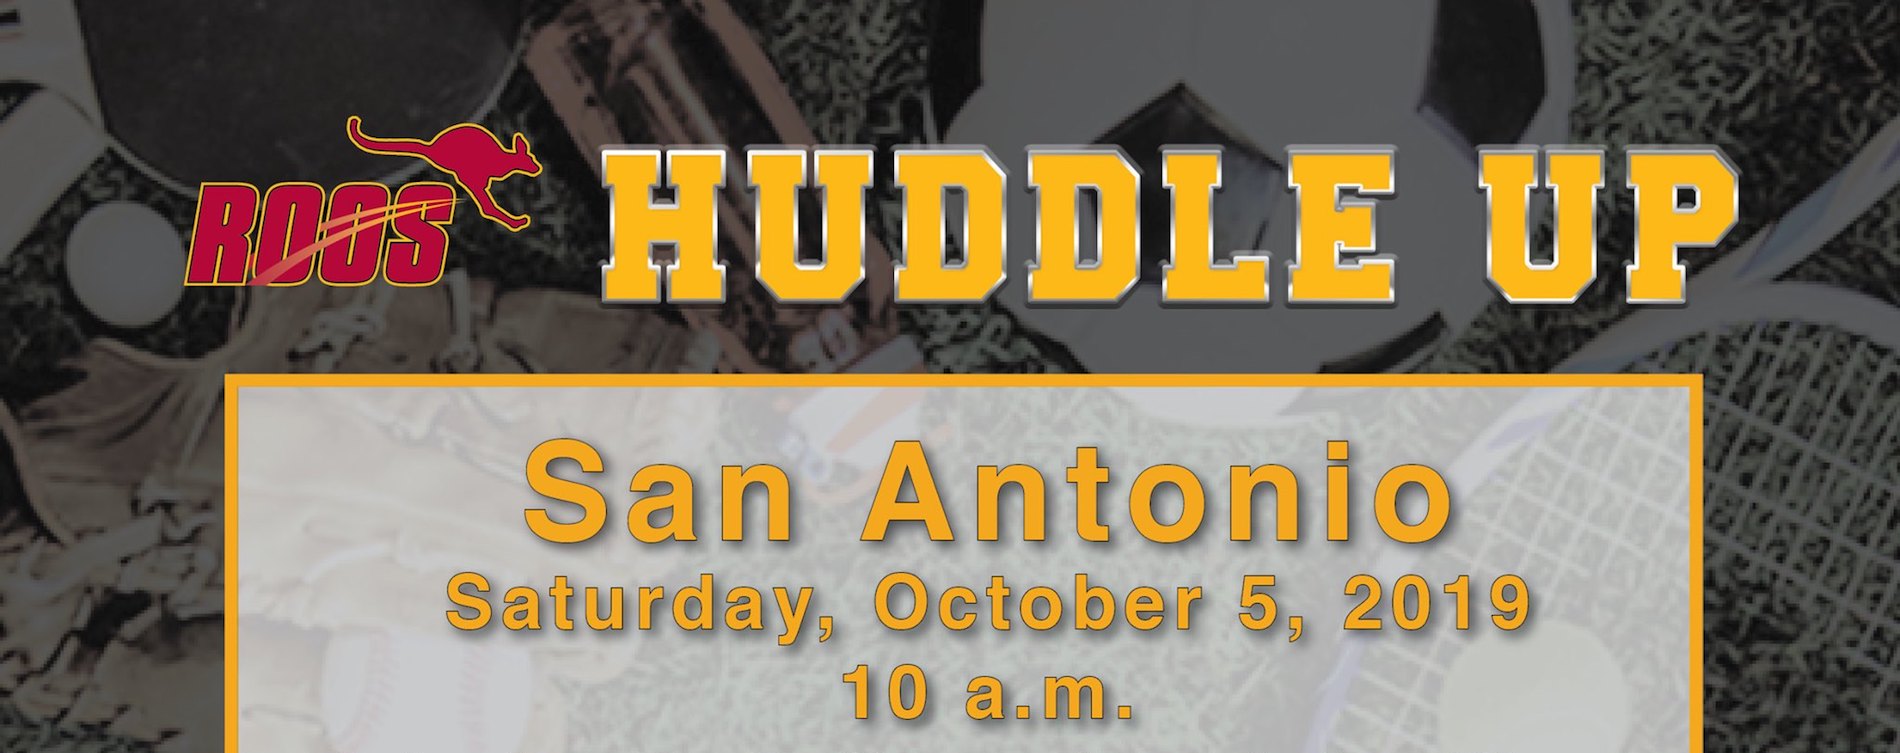 Huddle Up in San Antonio!